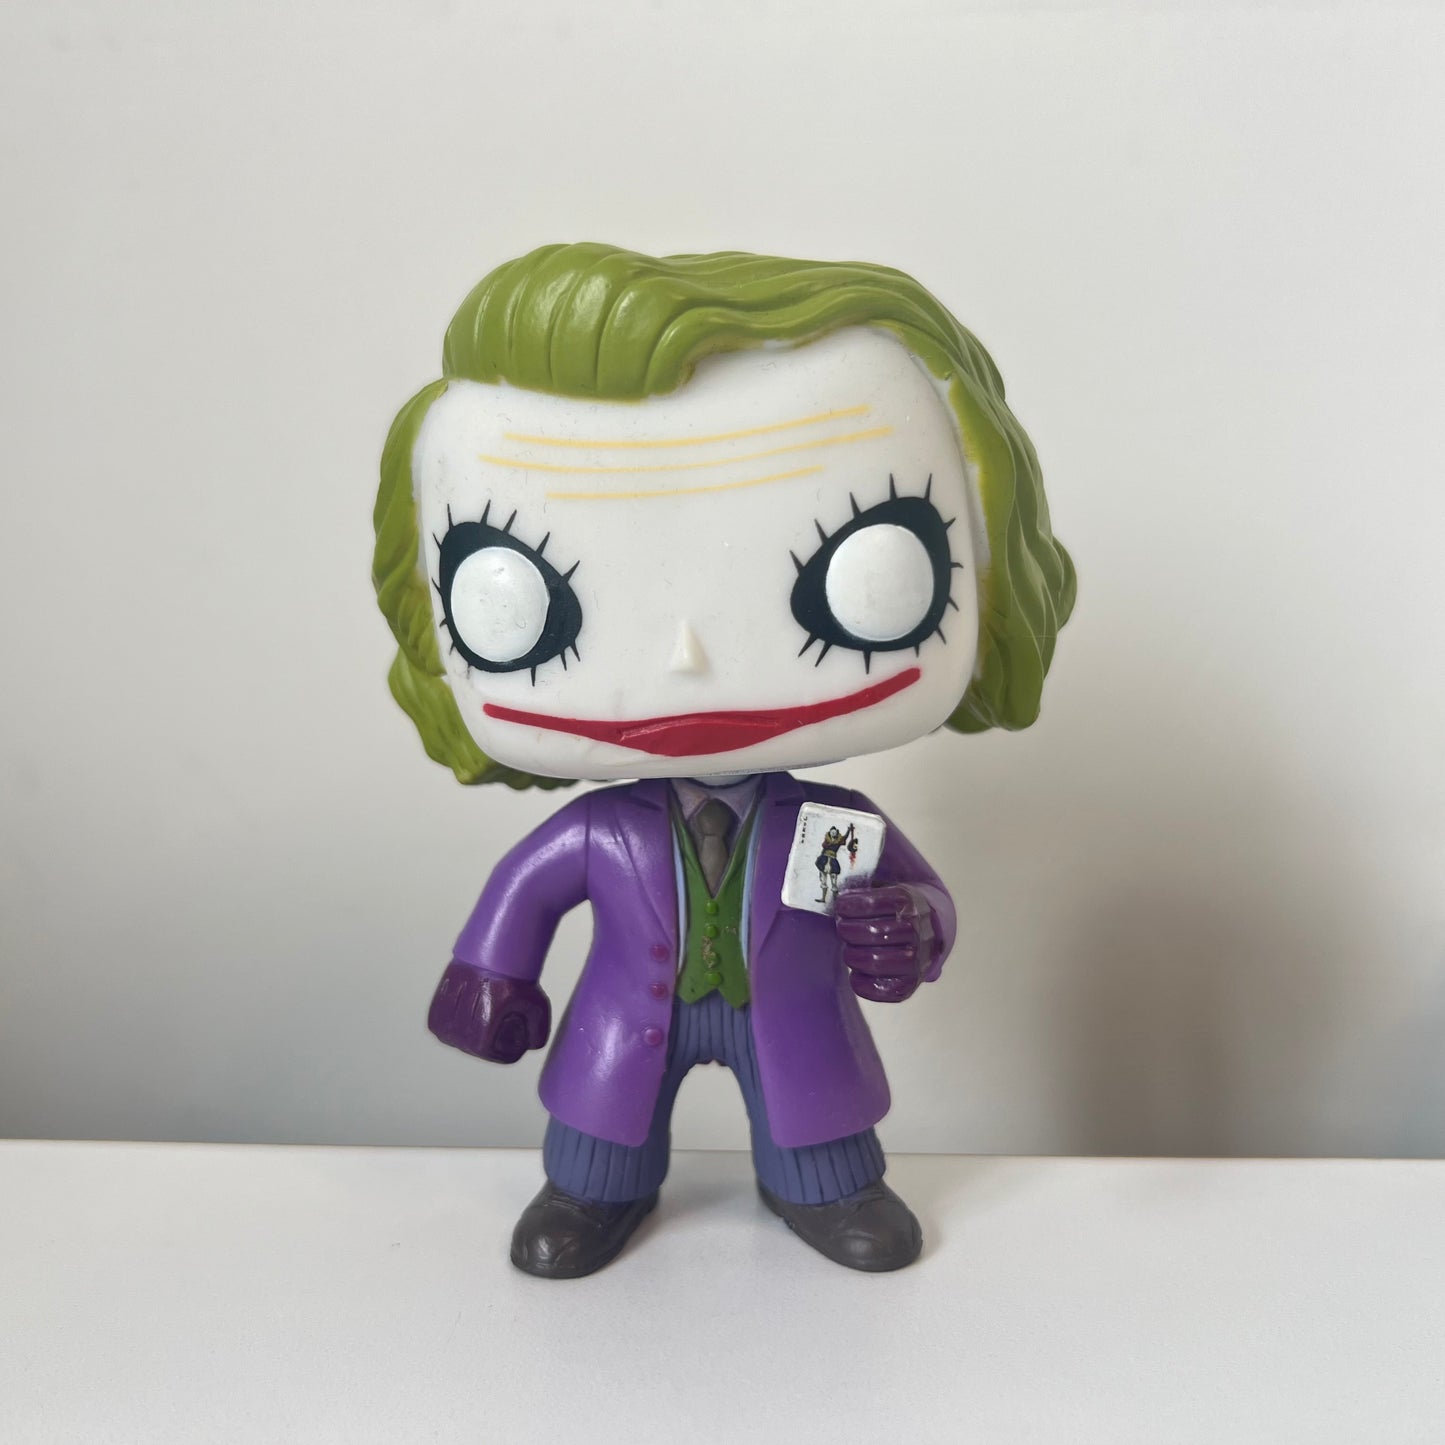 Batman The Dark Knight - The Joker 36 Funko Pop (No Box or Insert Included)